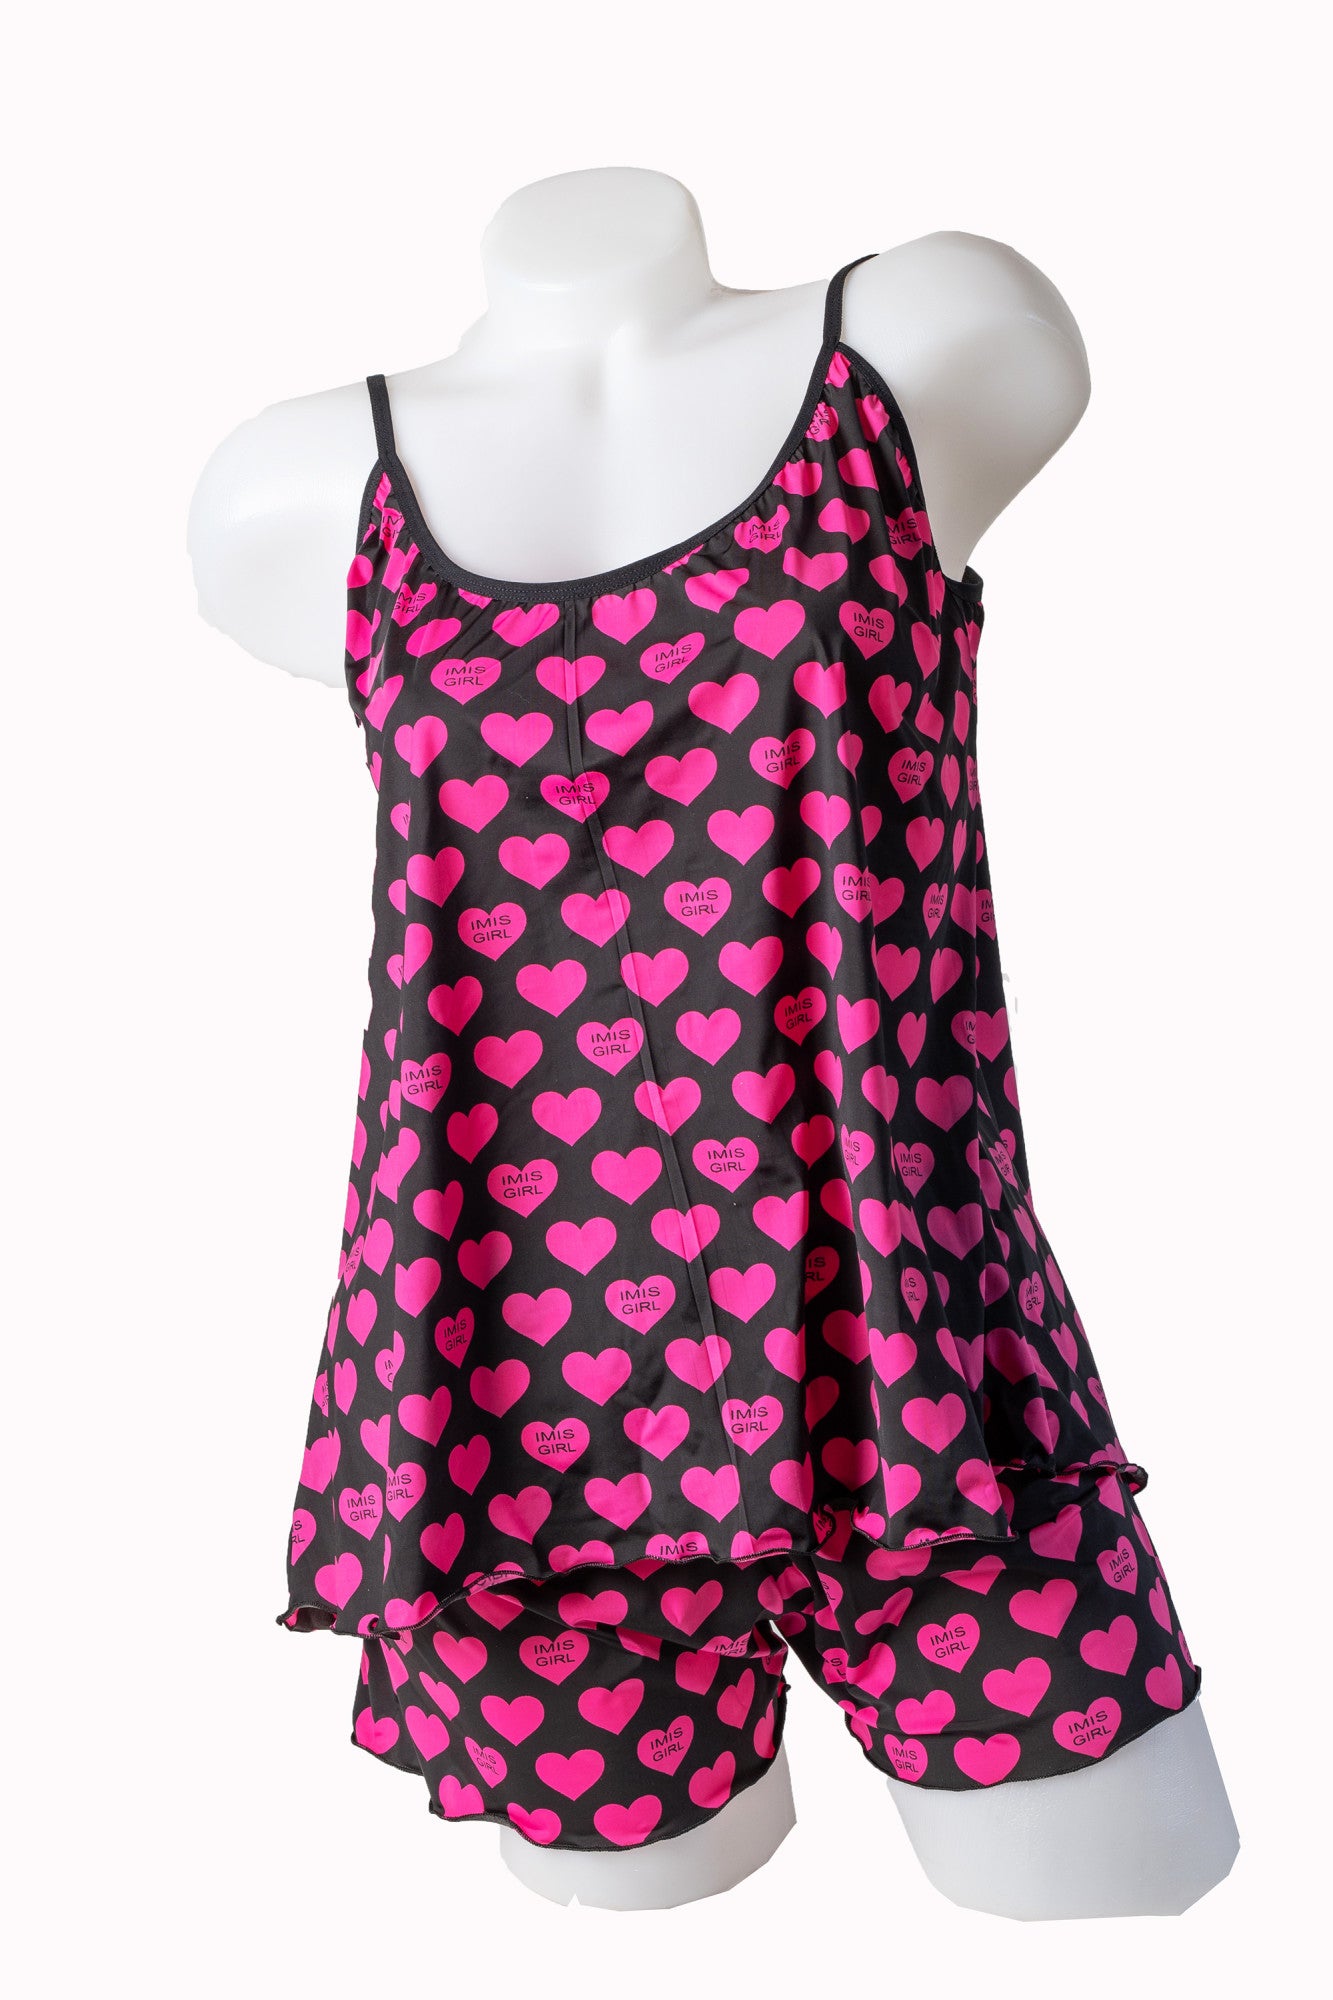 Pijama dama, microfibra imprimata, elastica, negru cu inimioare, Pinky Heart, BLD by Exclusive